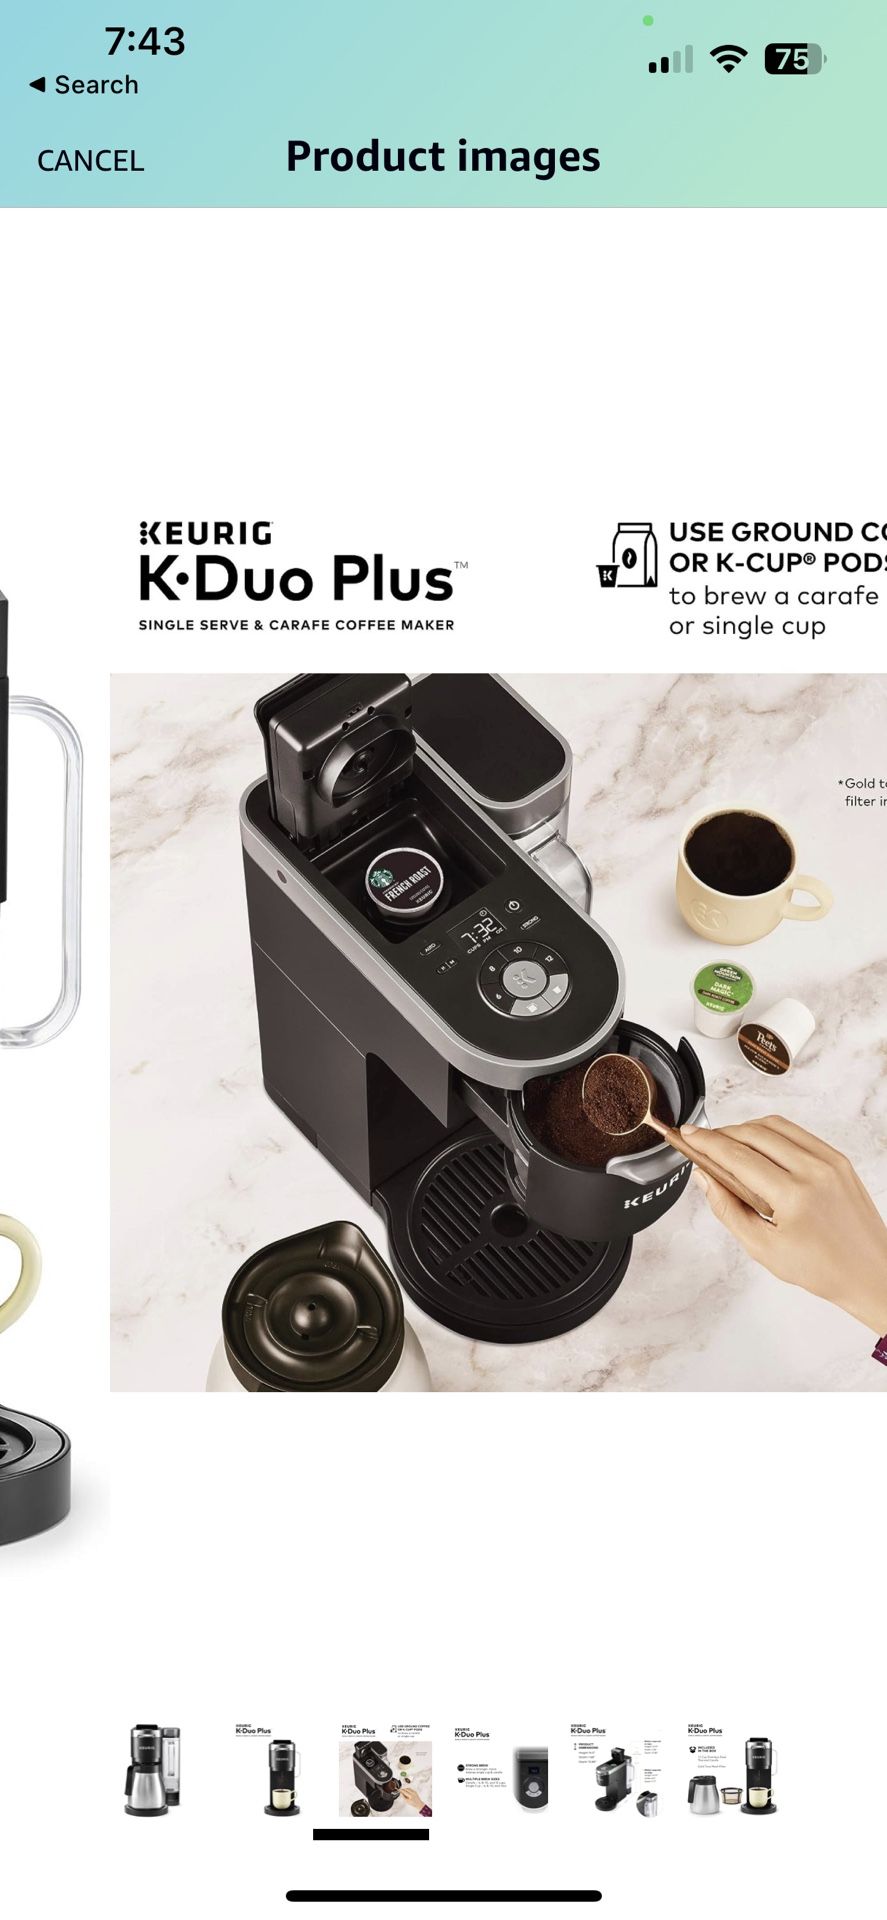 keurig K-Duo Plus Single Serve & Carafe Coffee Maker